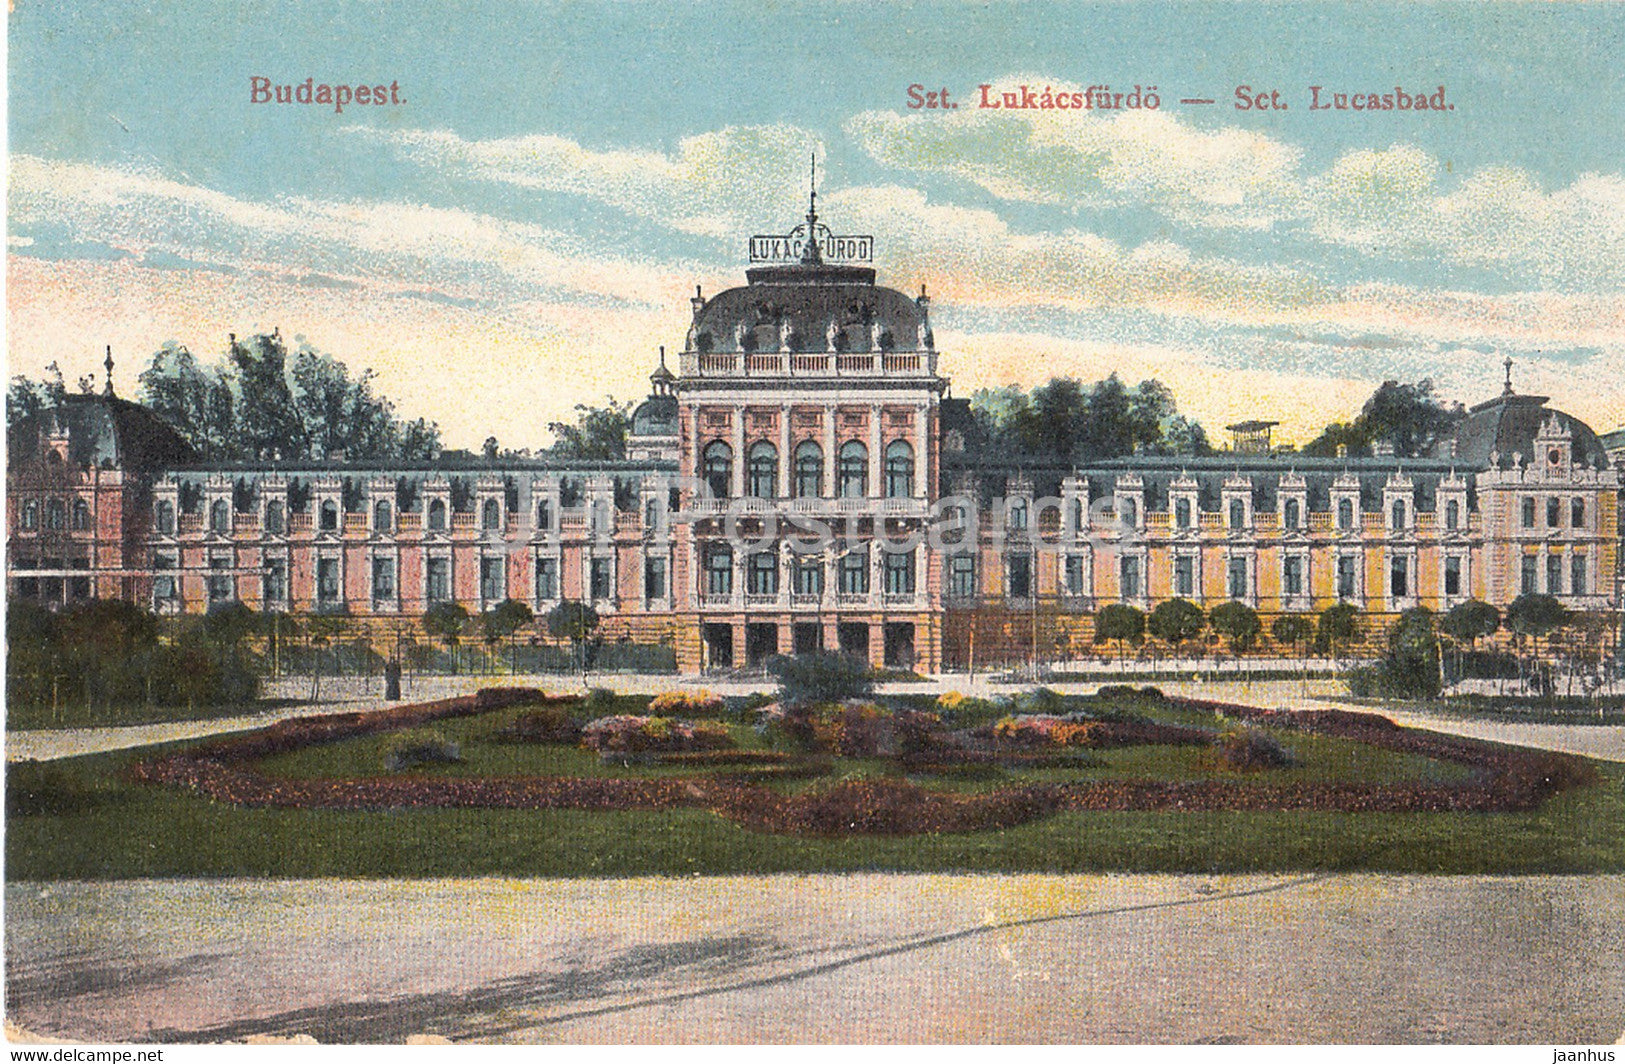 Budapest - Szt Lukacsfurdo - Sct Lucasbad - old postcard - Hungary - unused - JH Postcards